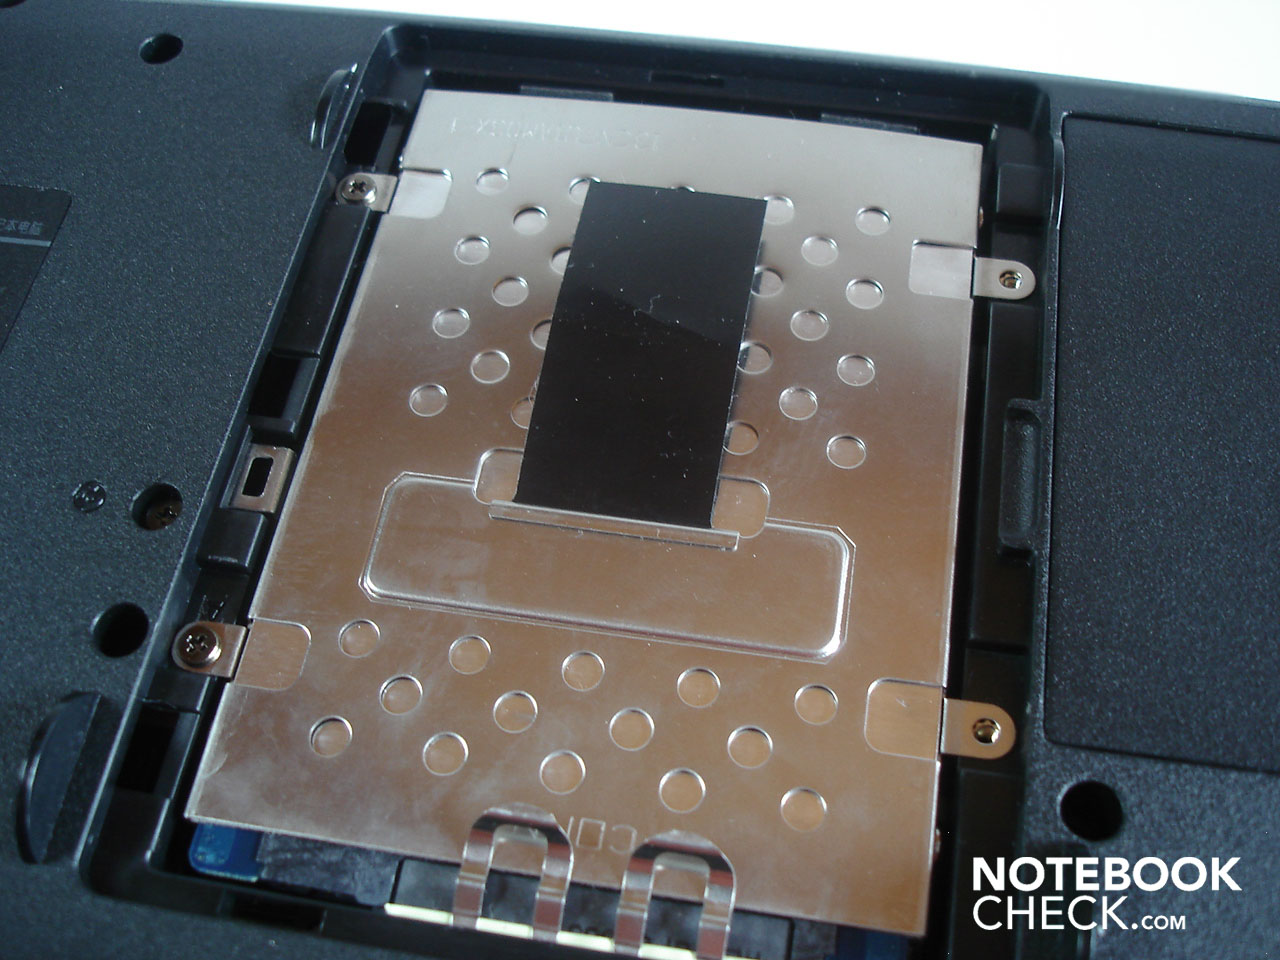 Nvidia Geforce Gtx 260M Notebook